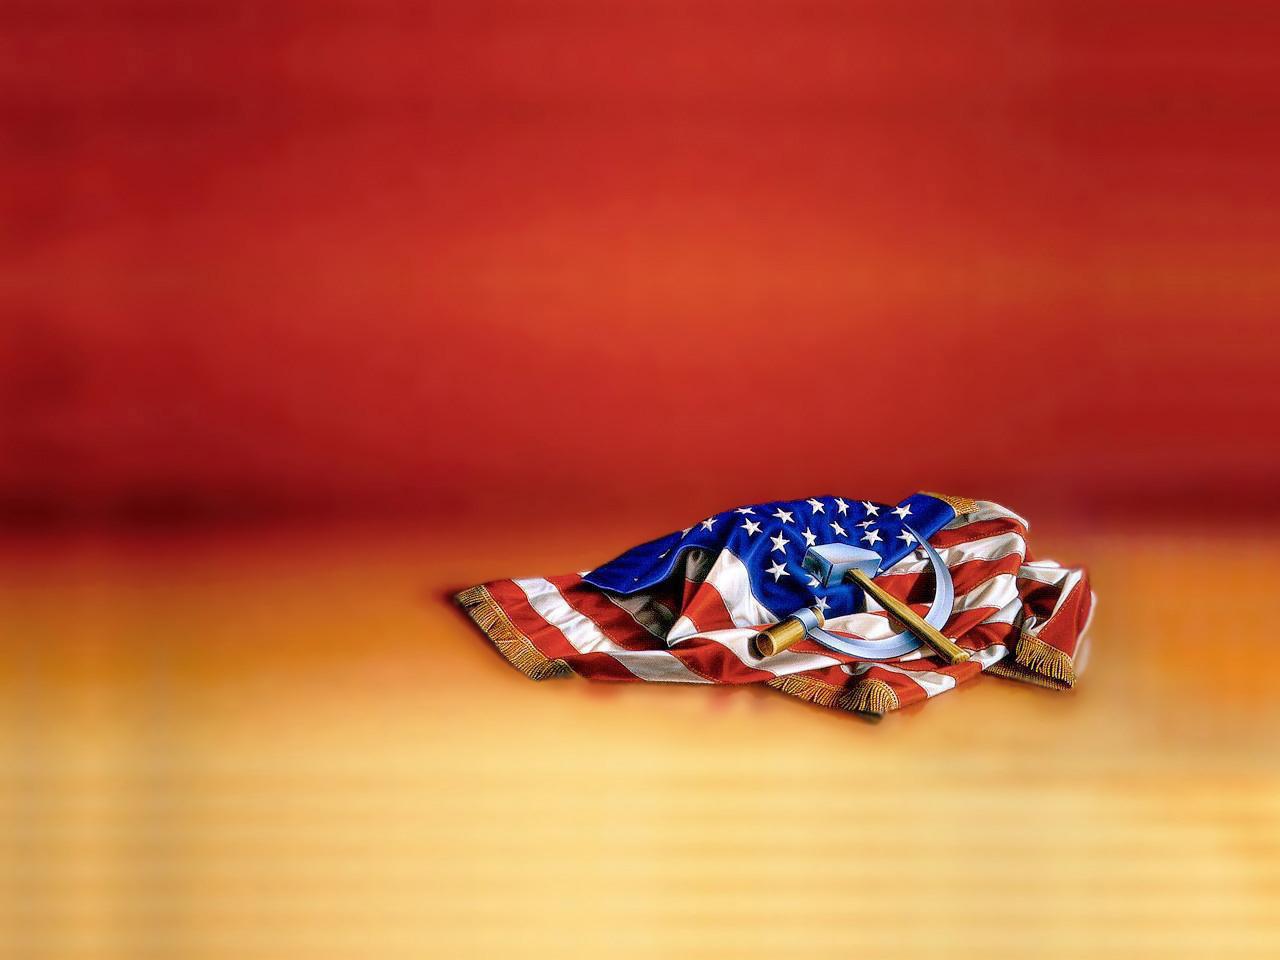 обои Серп и молот на американском флаге фото